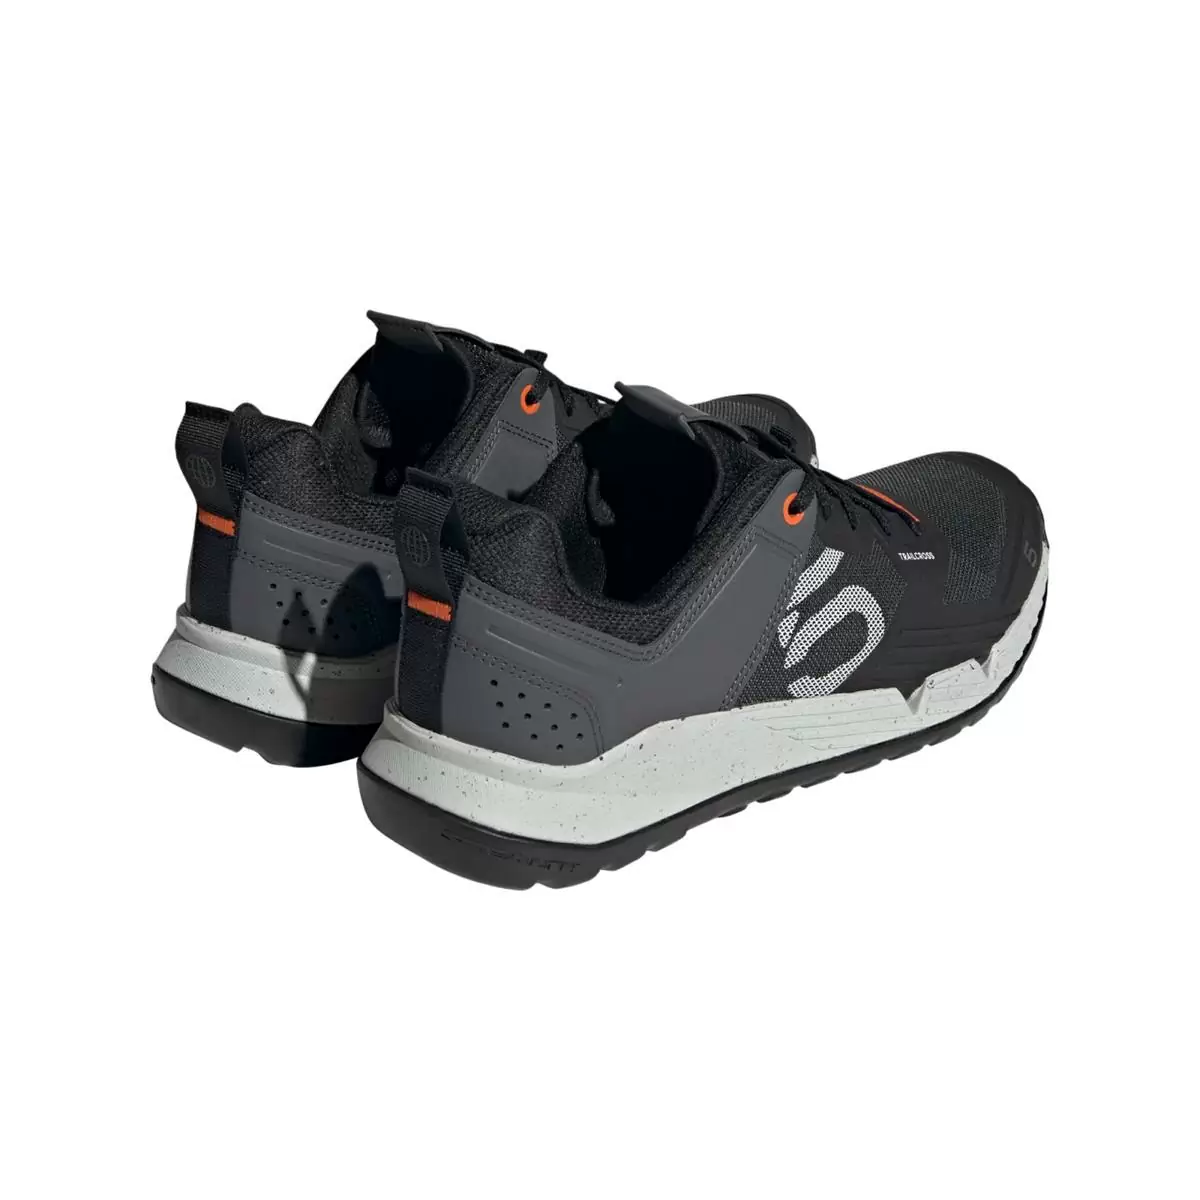 5.10 Sapatos MTB Trailcross XT Flat Preto/Cinza Tamanho 42.5 #5